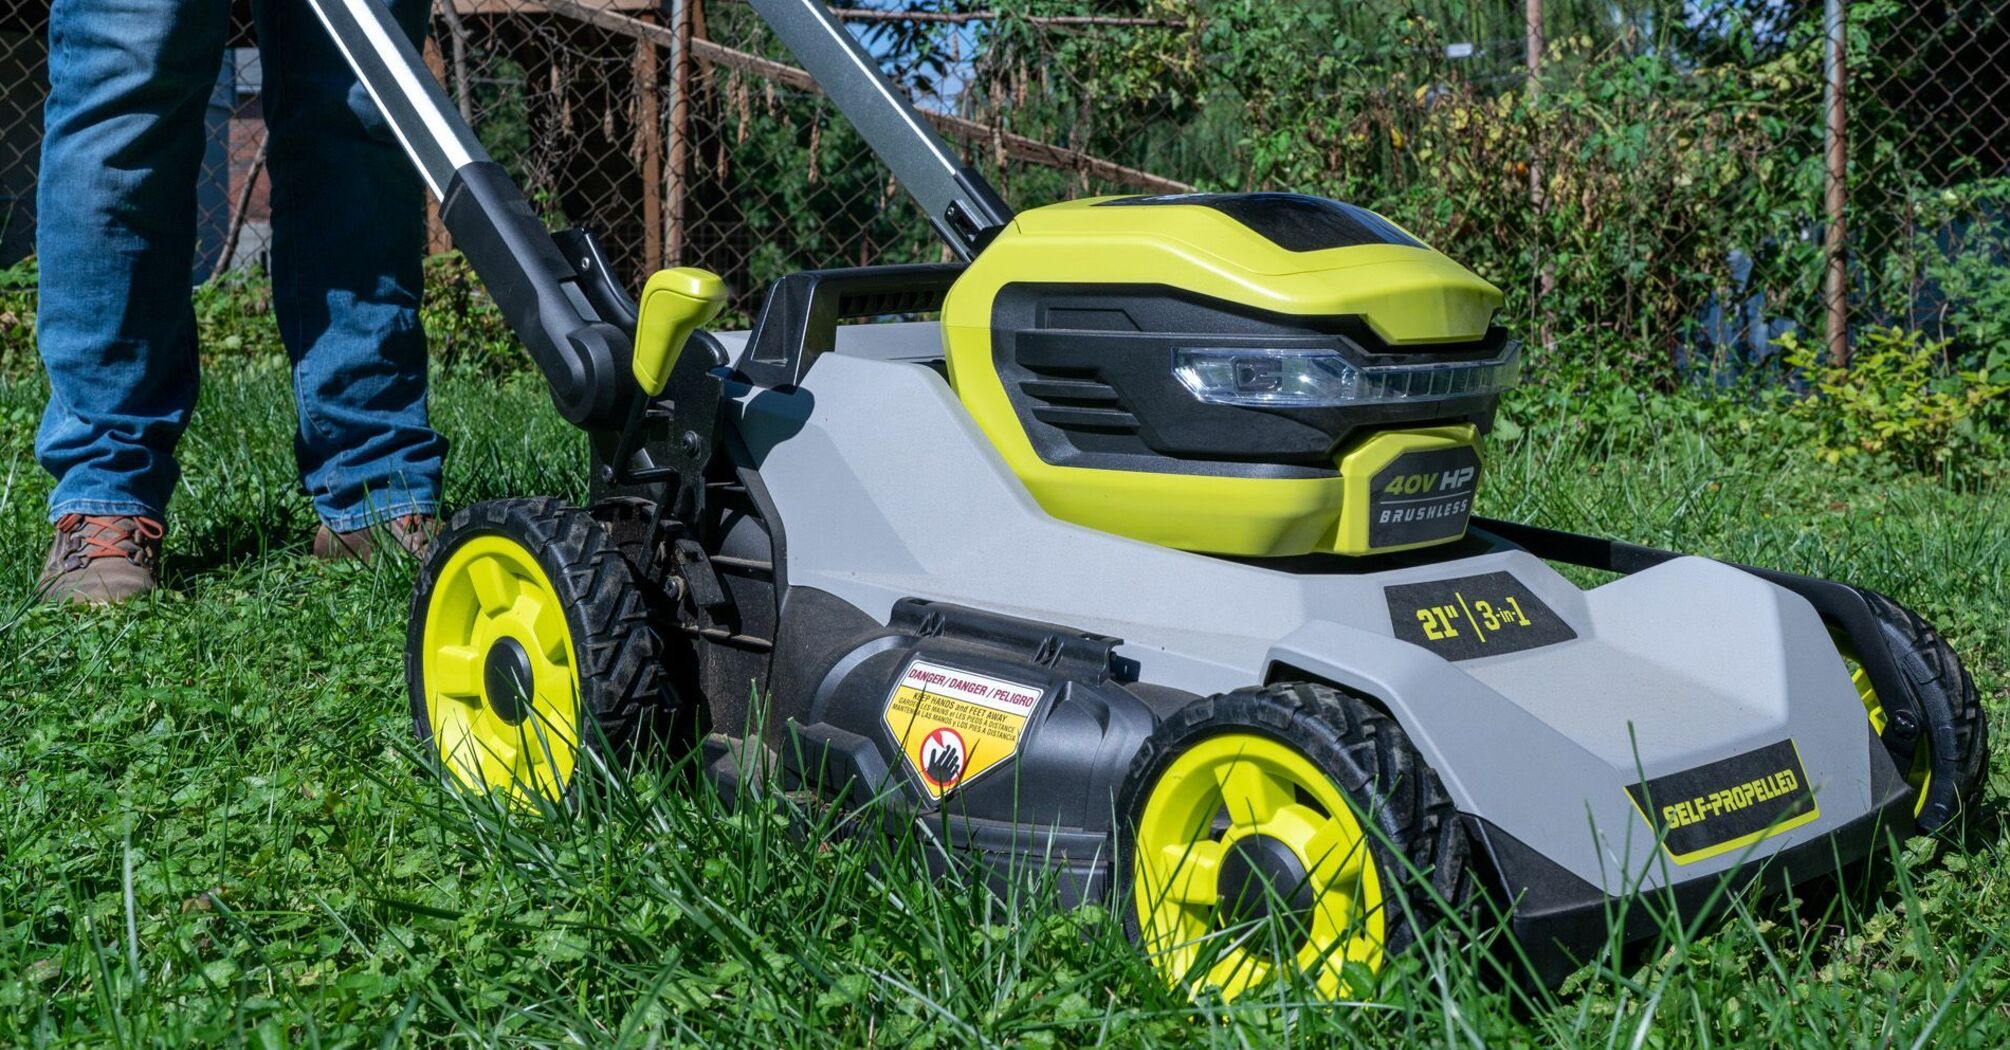 Should you buy an electric lawn mower